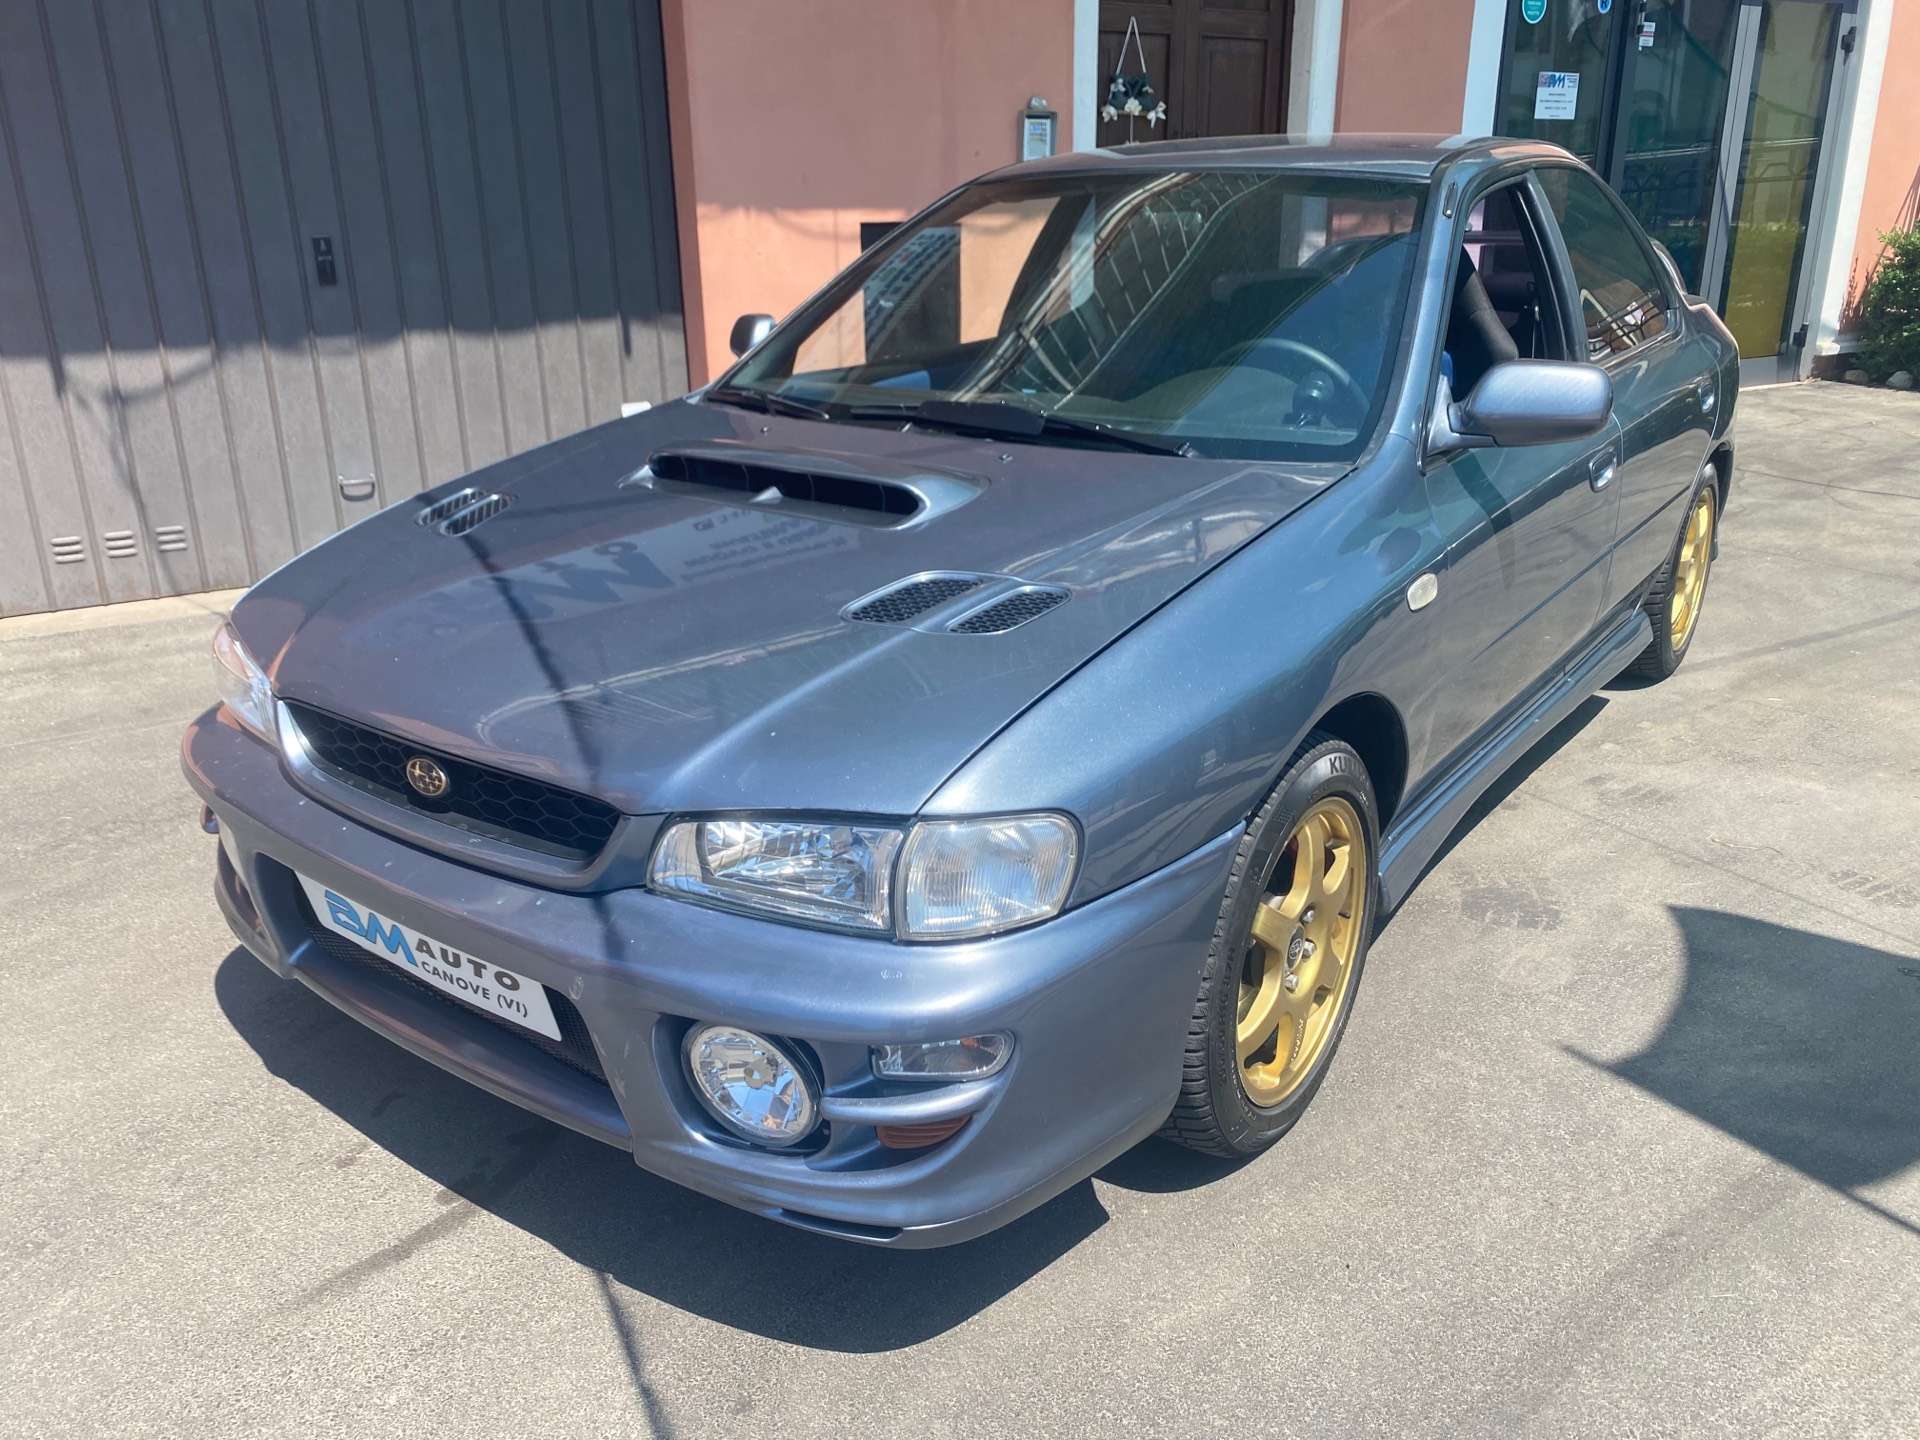 Subaru Impreza Other in Grey used in Canove di roana - Vicenza - VI for € 17,500.-